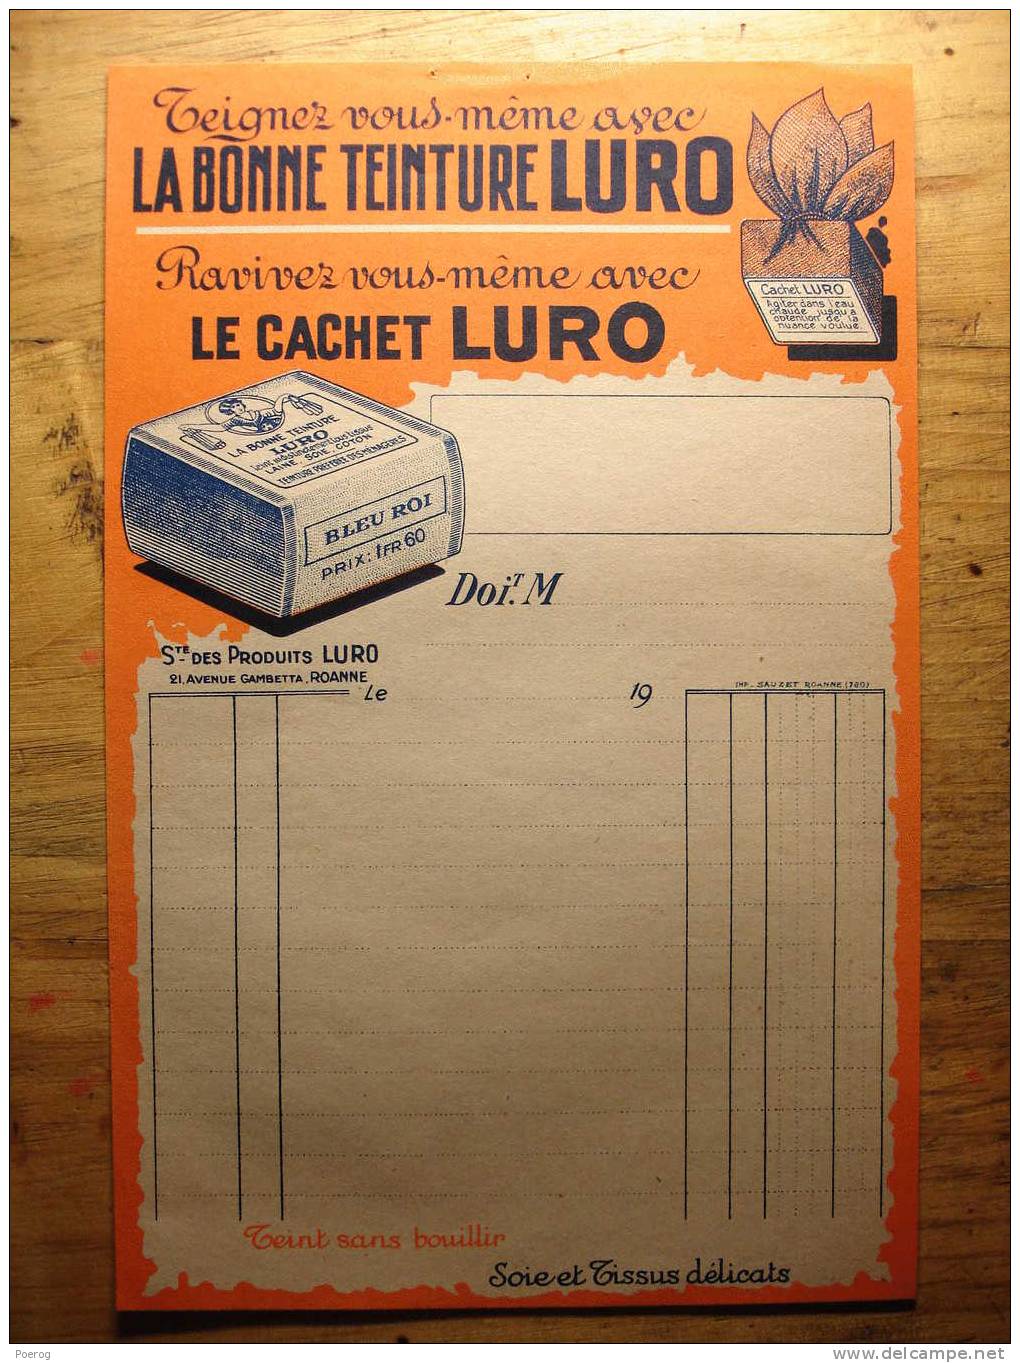 ANCIENNE FACTURE VIERGE - TEINTURE LURO - LE CACHET LURO - DYE - 19?? - Chemist's (drugstore) & Perfumery